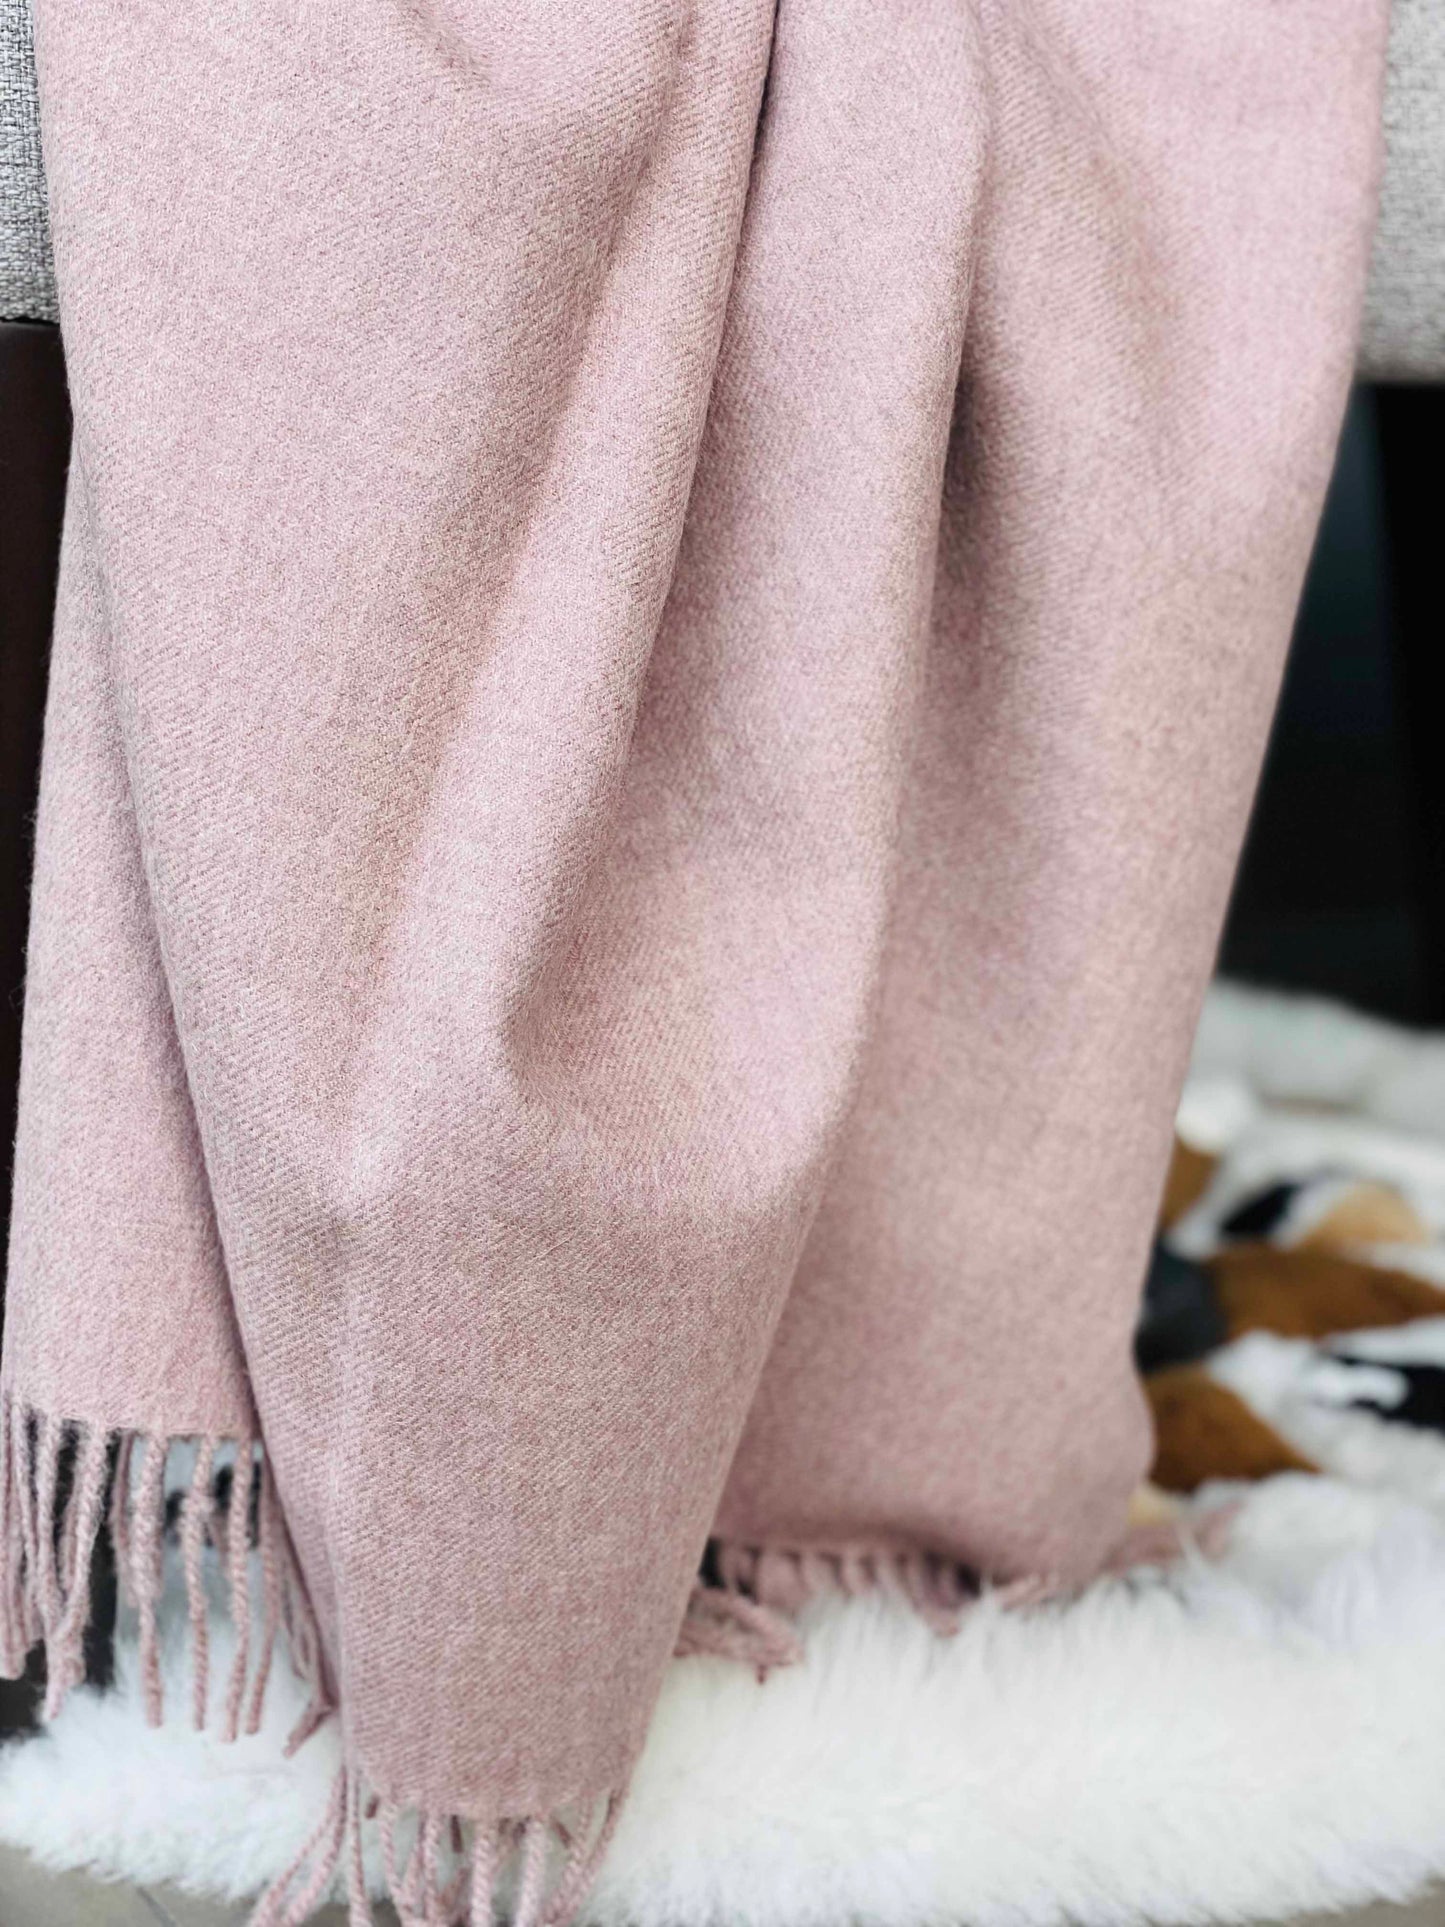 Blanket from alpaca wool in pink color